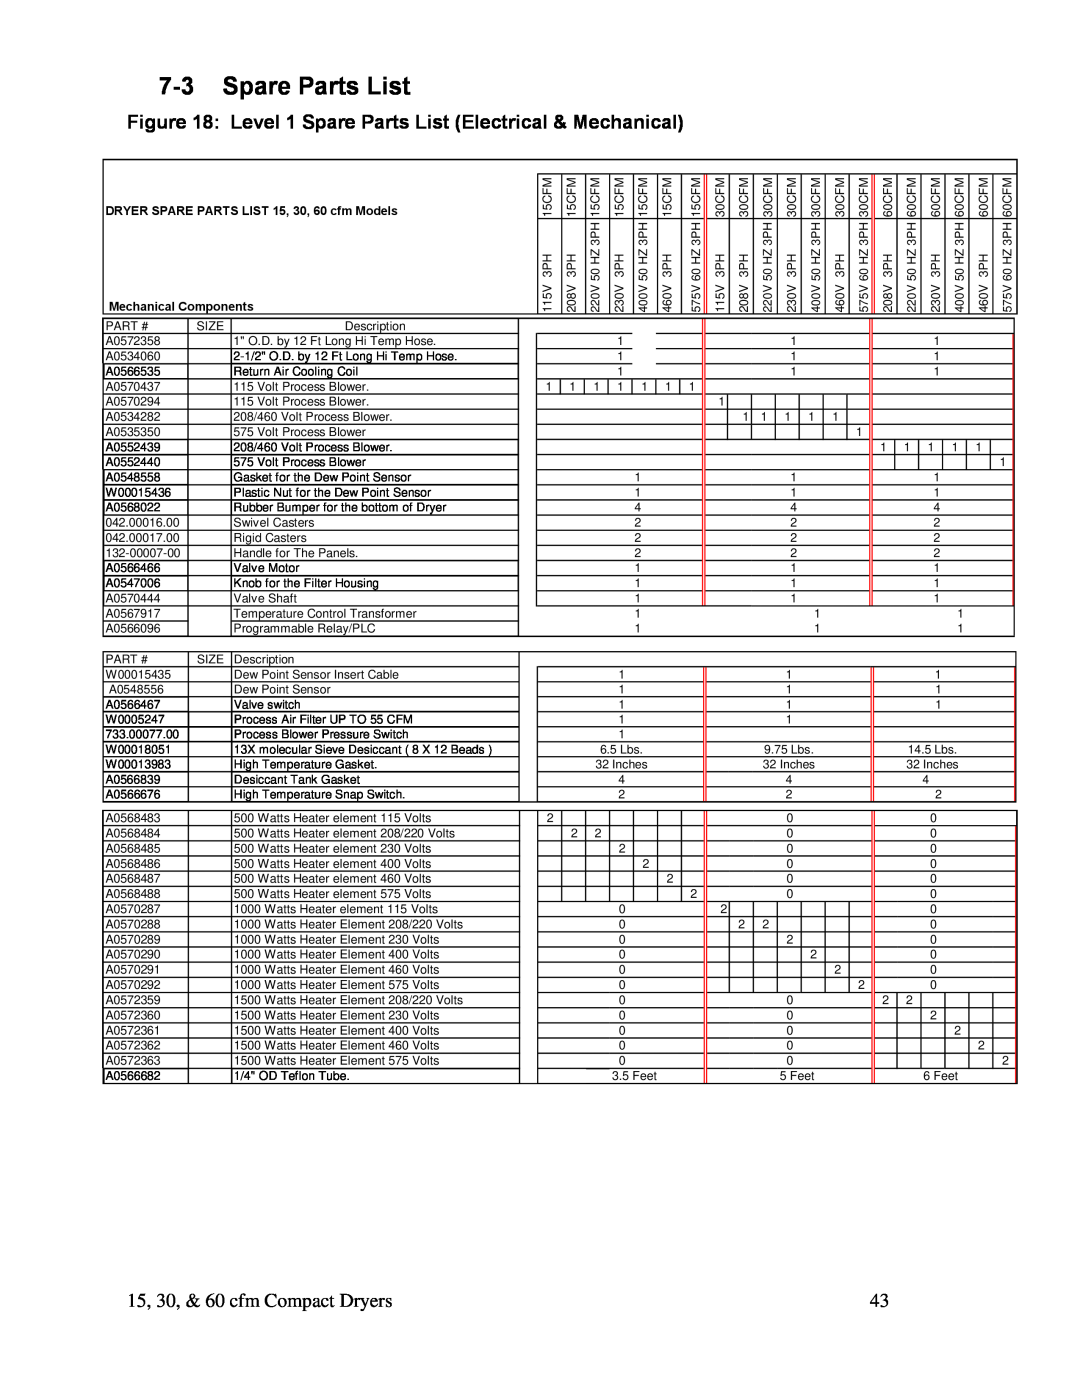 Sterling 30 cfm Level 1 Spare Parts List Electrical & Mechanical, DRYER SPARE PARTS LIST 15, 30, 60 cfm Models 